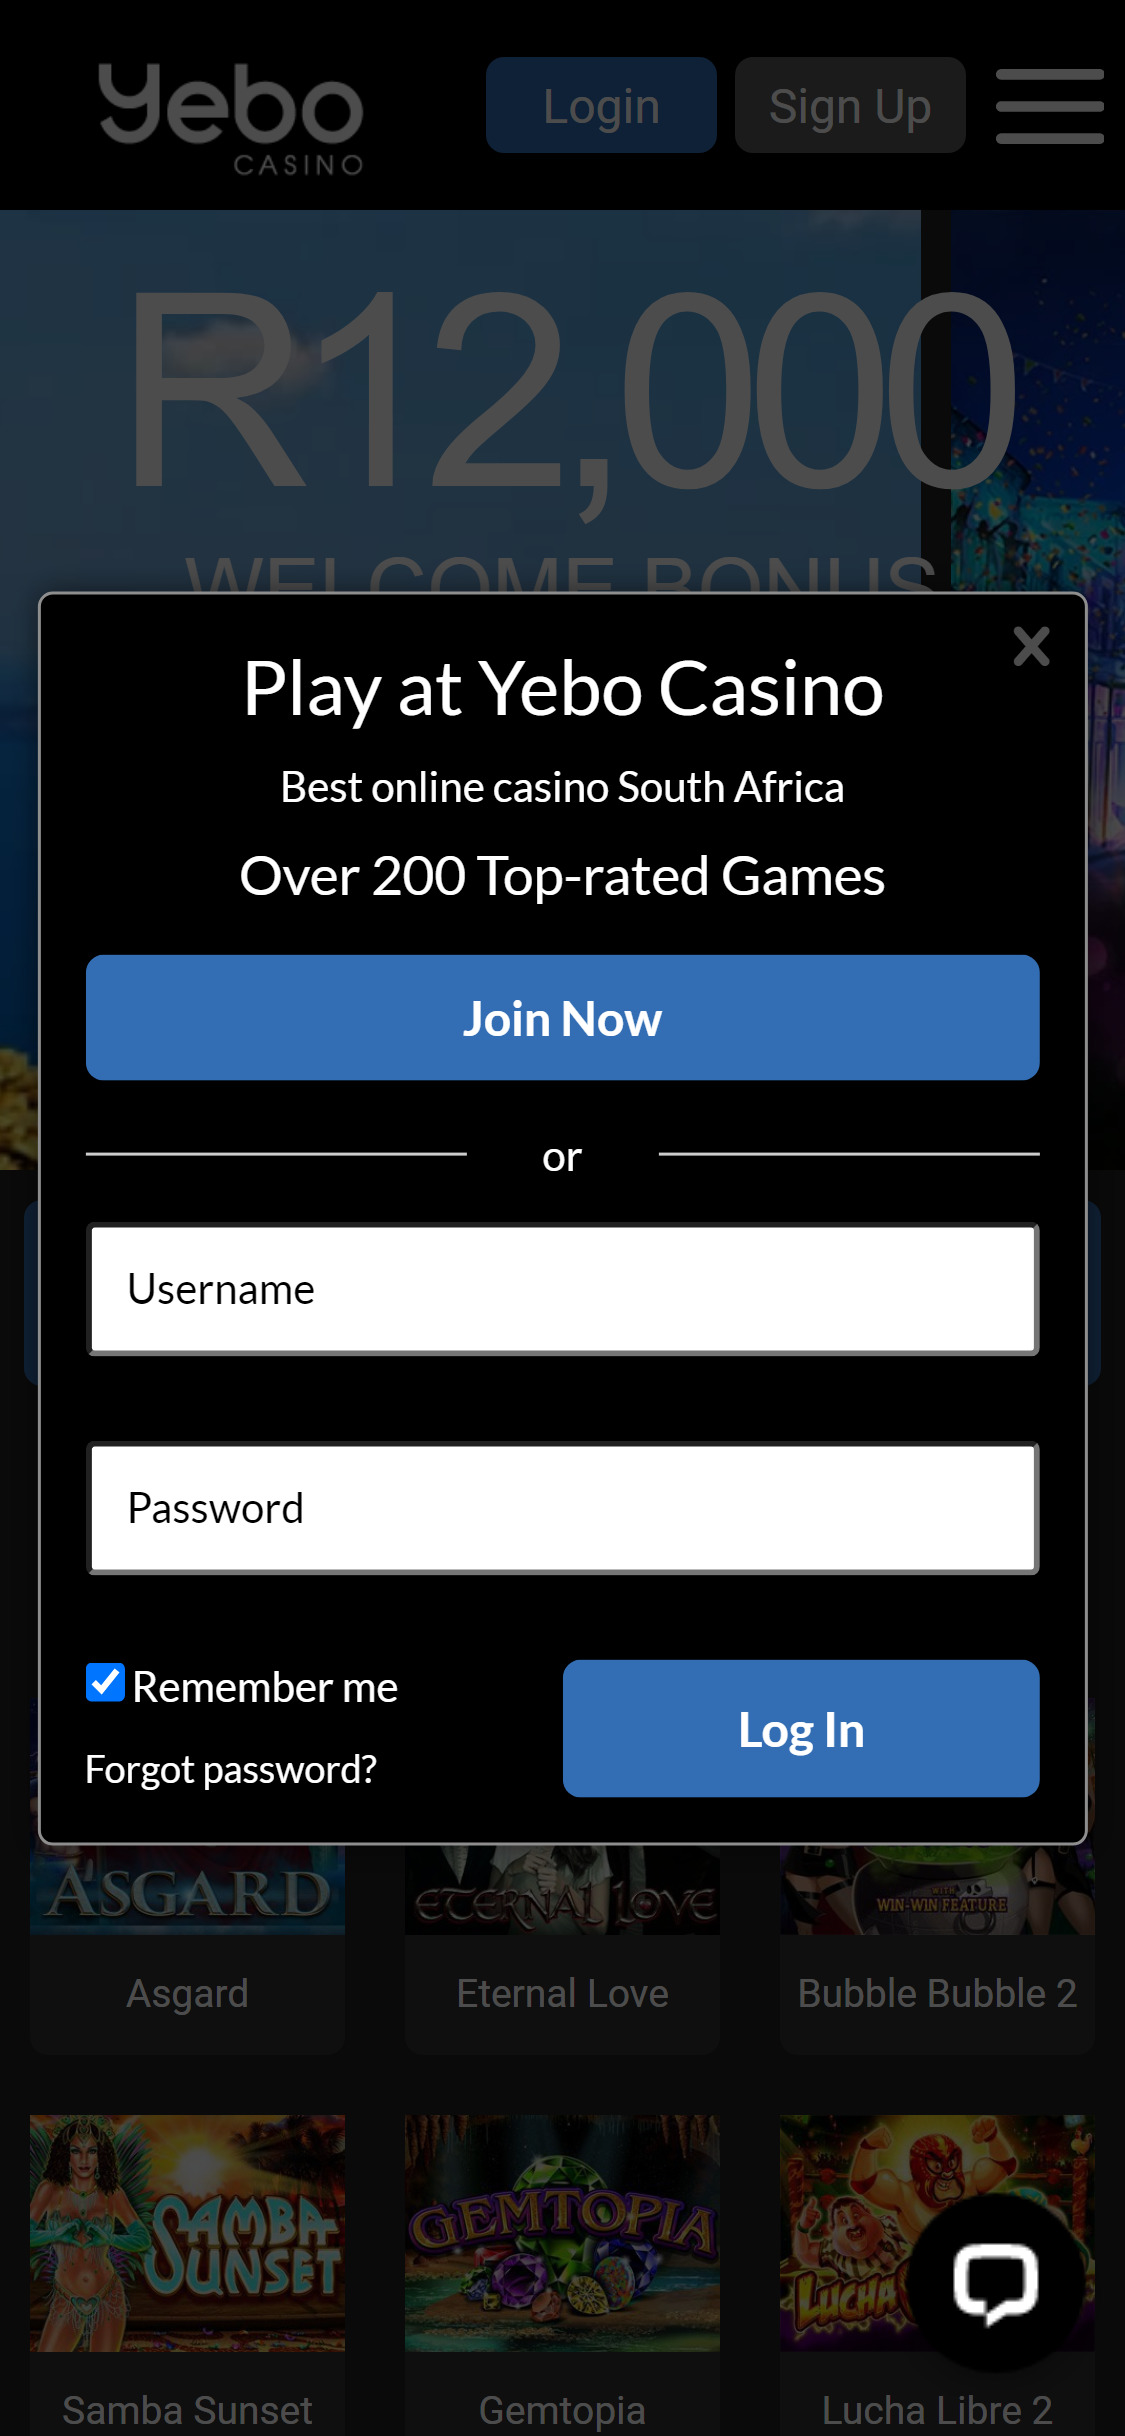 Yebo Casino Mobile Login Review